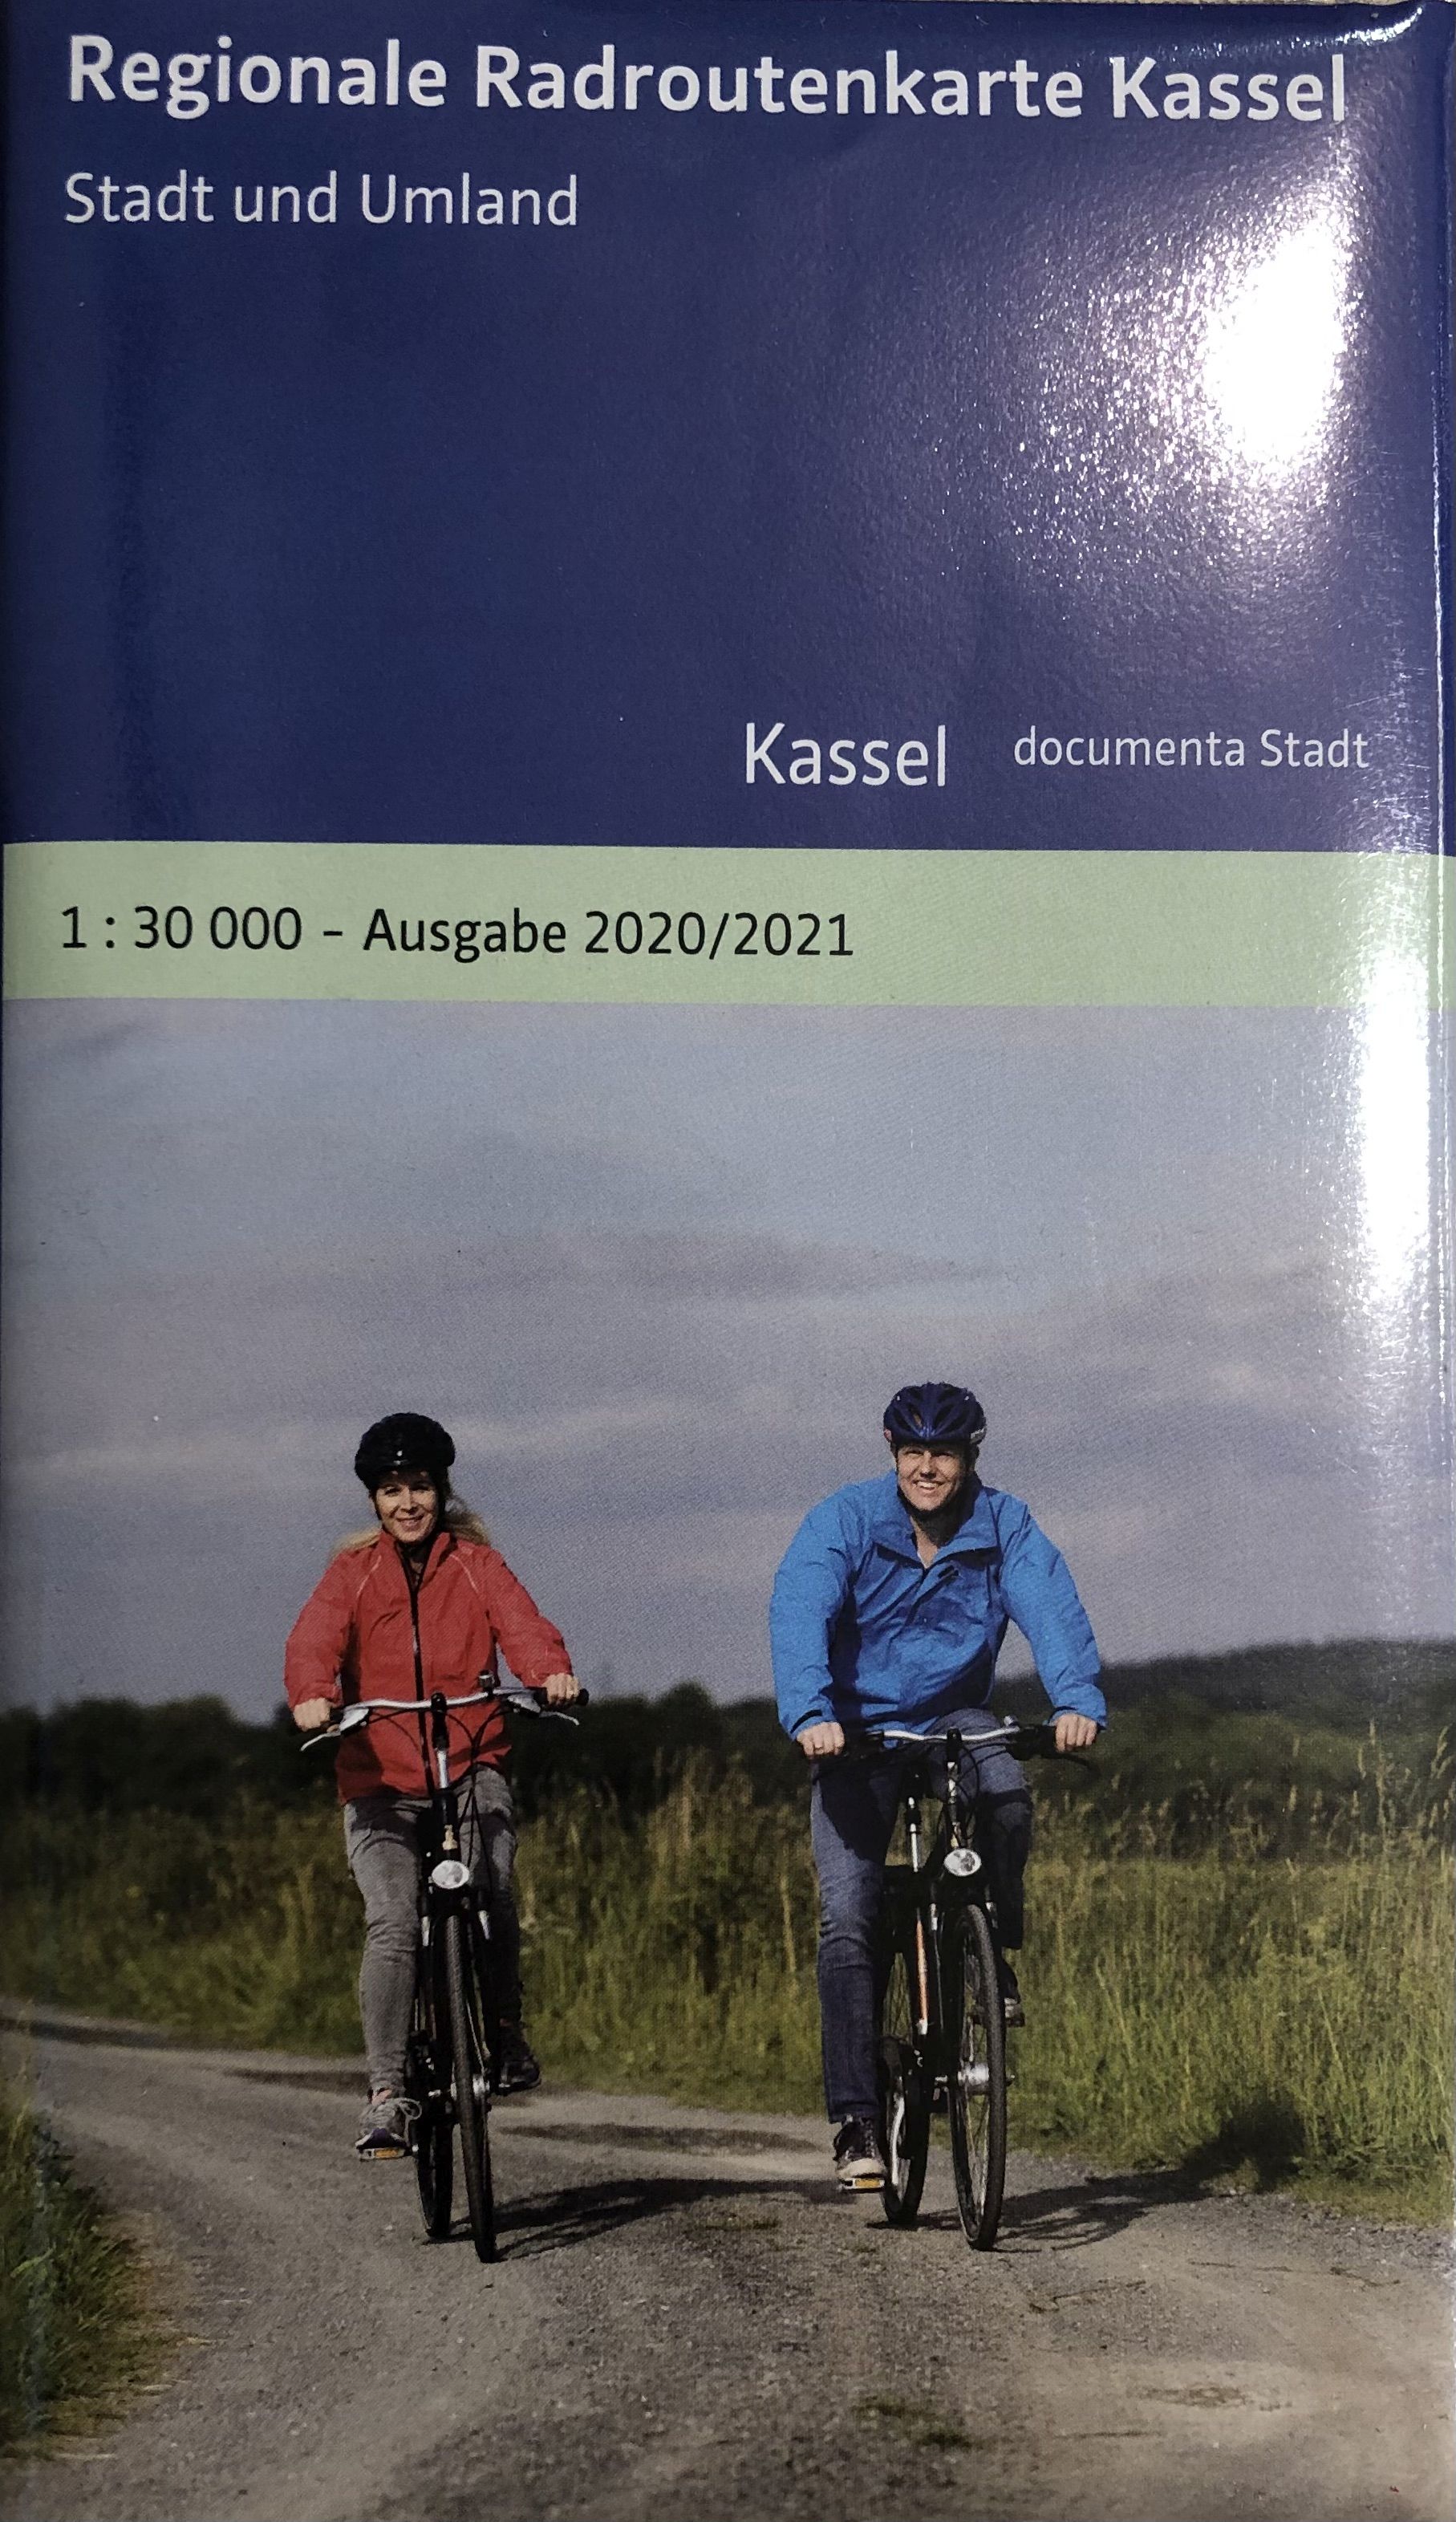 Regionale Radroutenkarte Kassel - Ausgabe 2020/2021